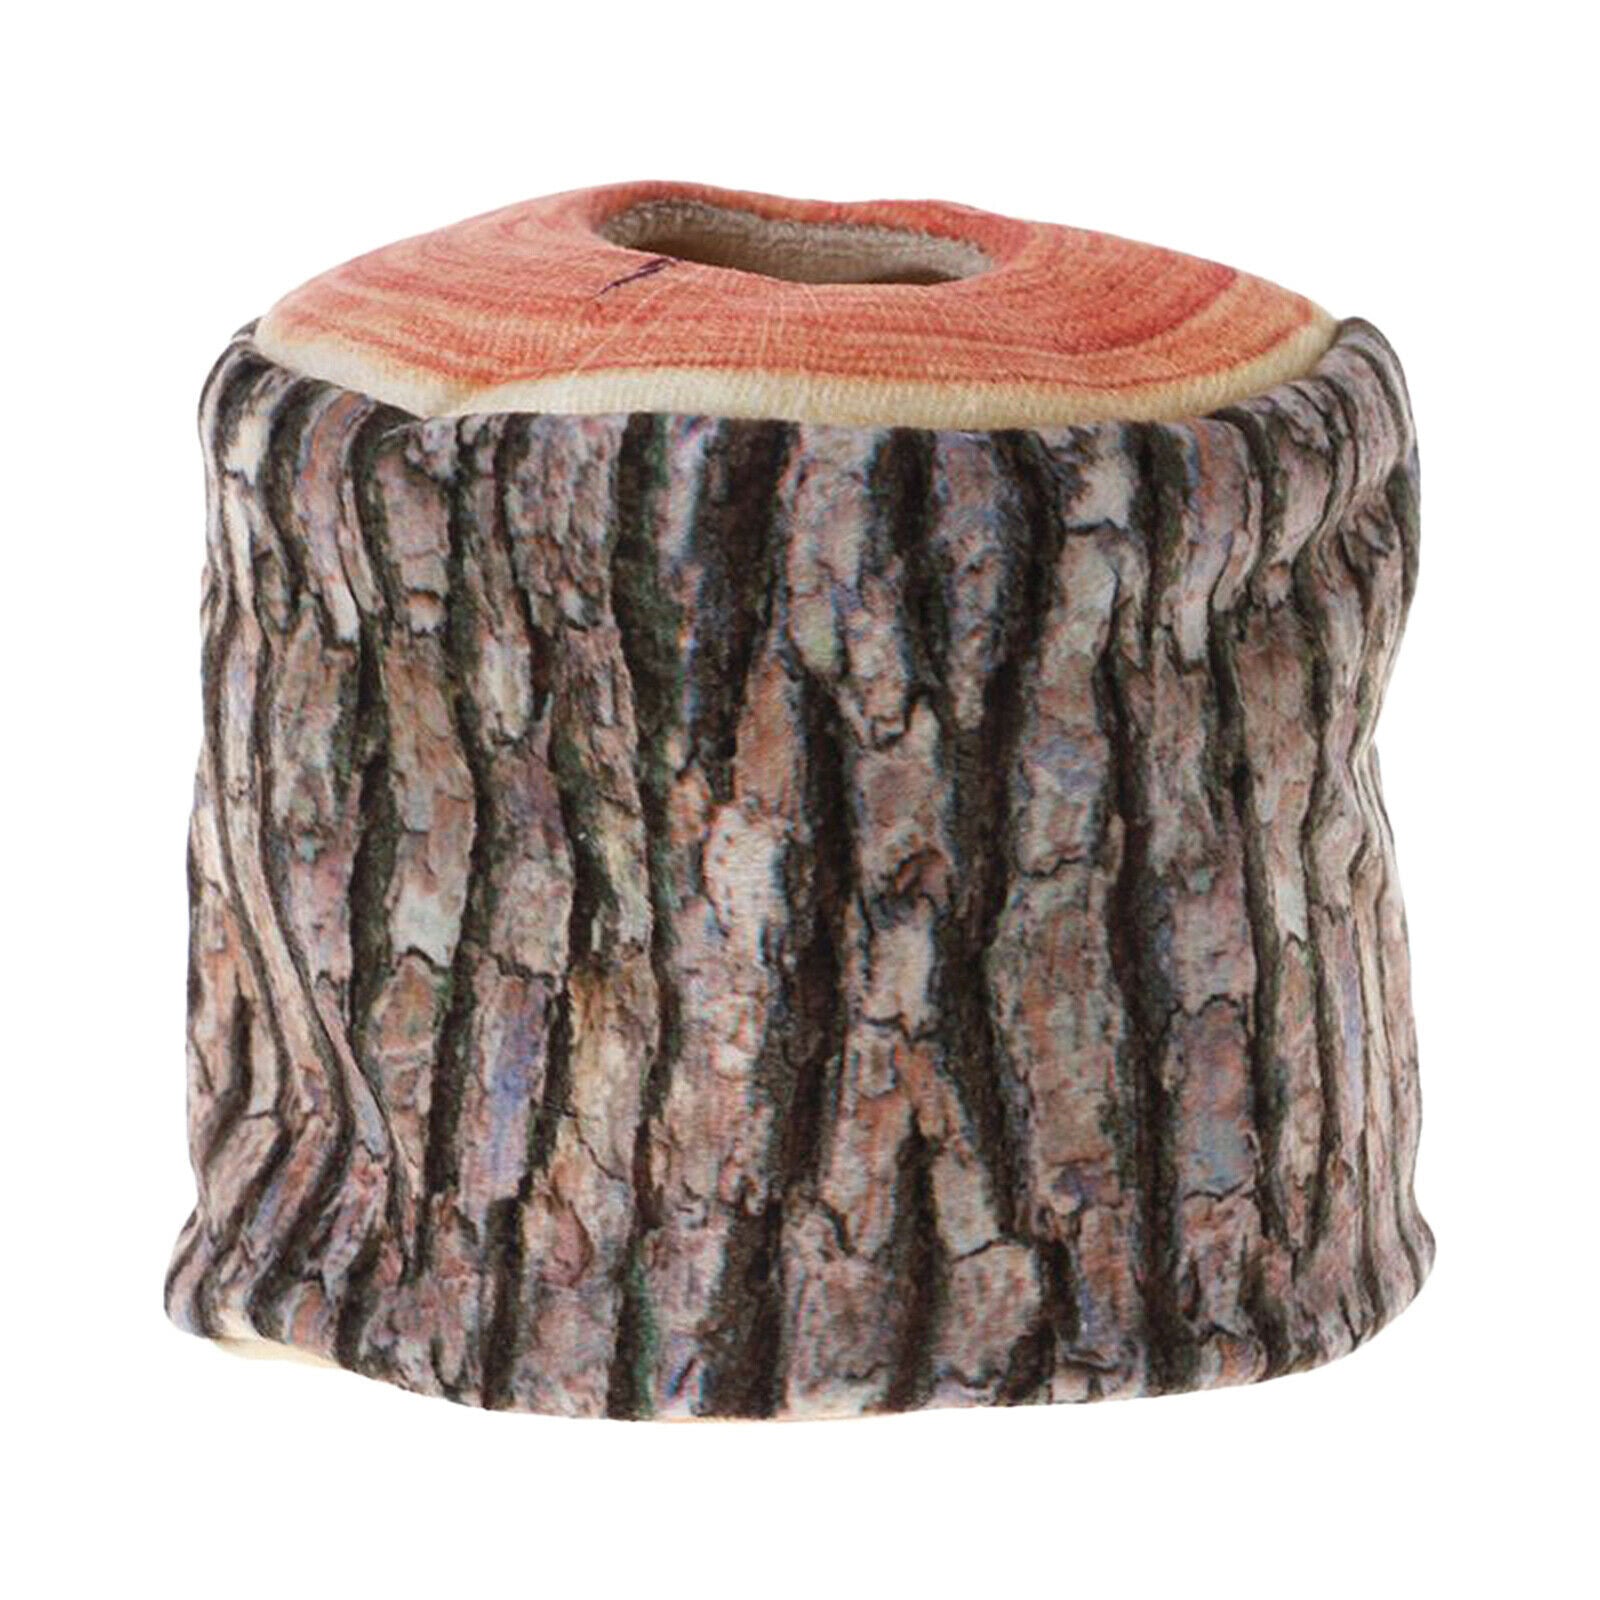 Premium Tree Bark Tissue Box Napkin Holder for Car Camping Office Decor